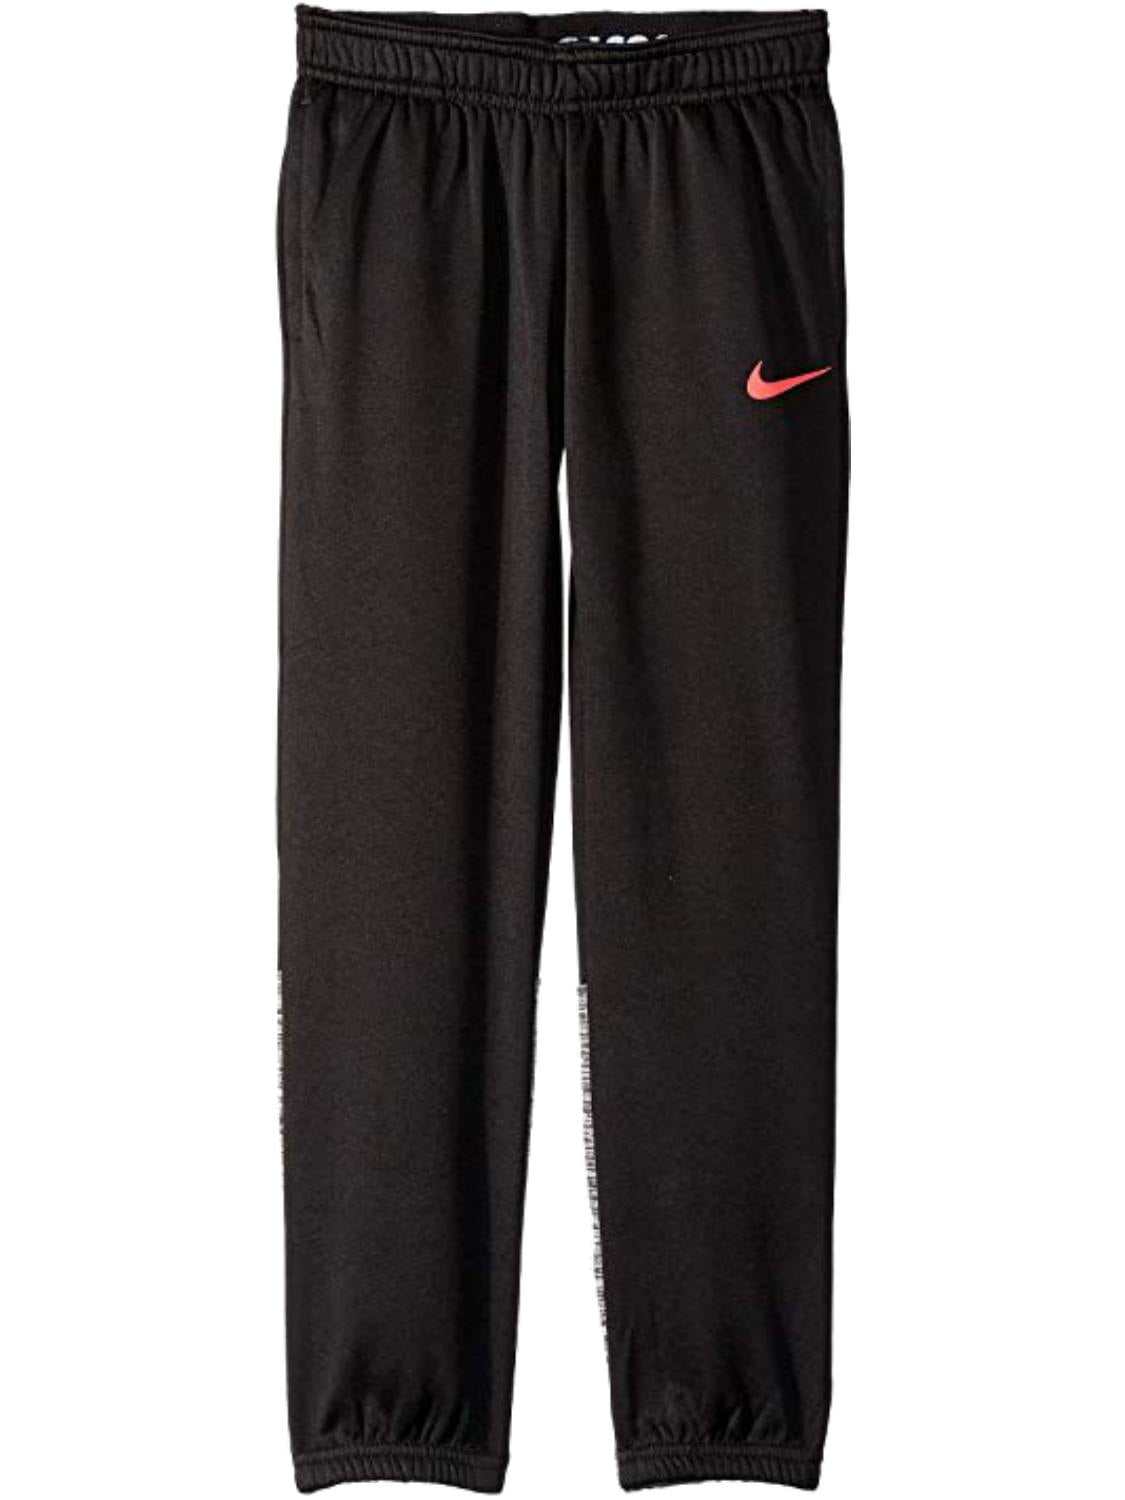 Nike Dry Therma Girls Black & Gray Athletic Leggings Stretch Sweat Pants 5  